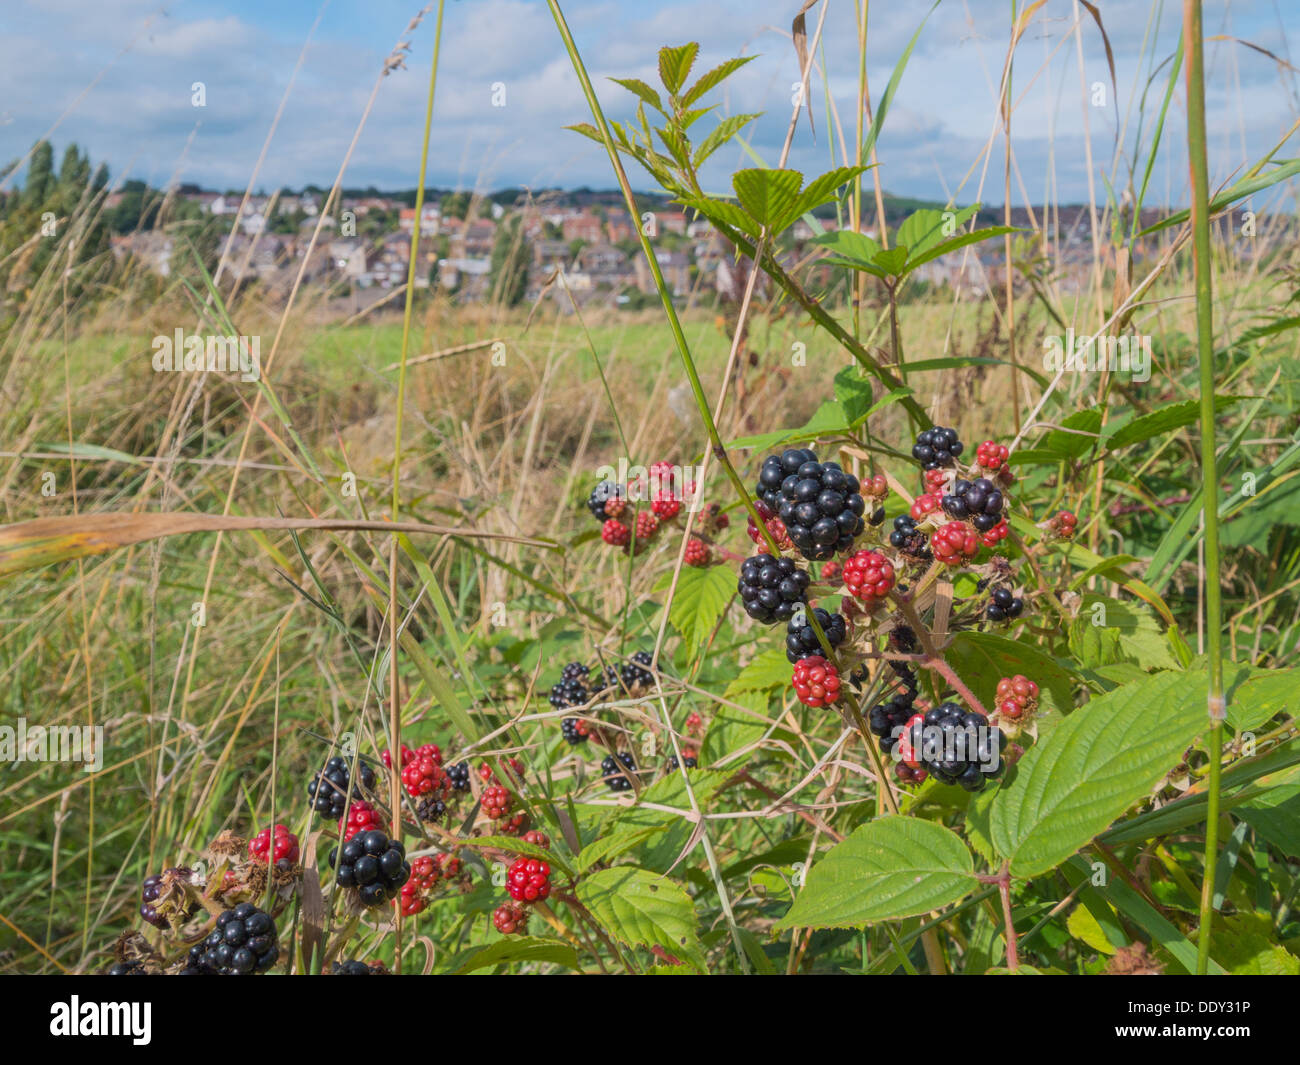 Black berries growing in a field. Stock Photo